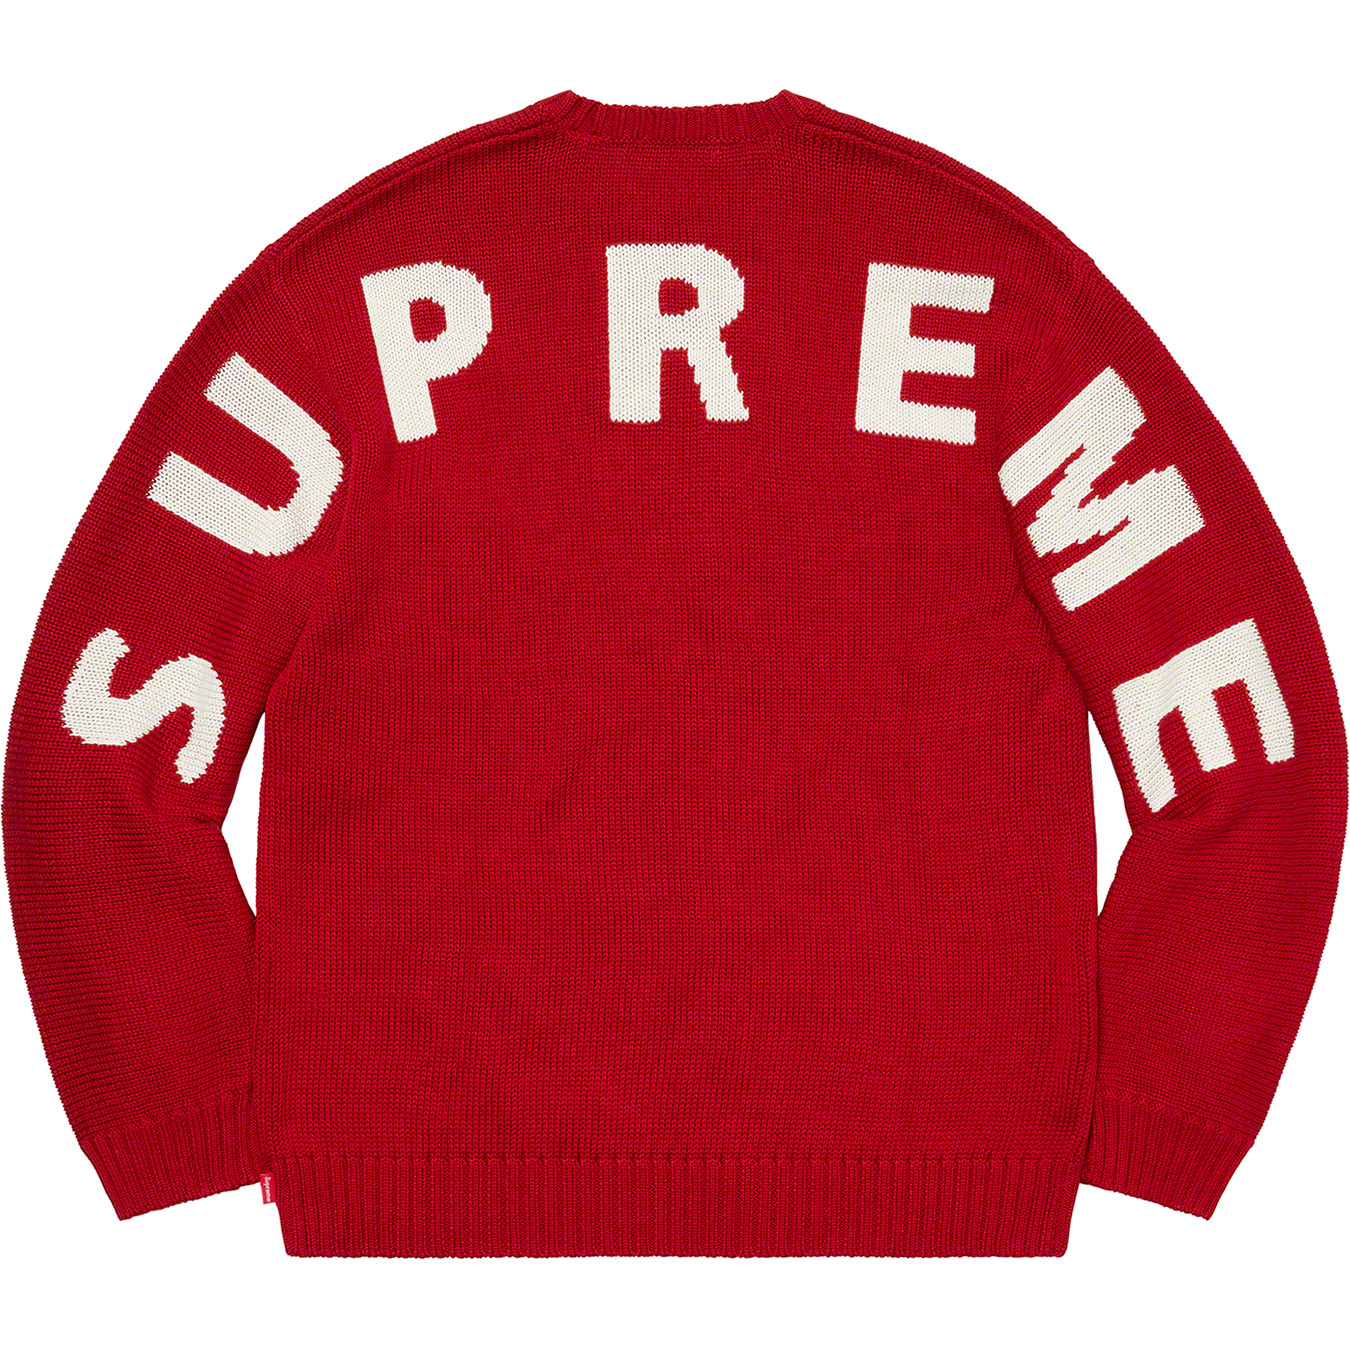 M 赤 Supreme Back Logo Sweater red 20SS